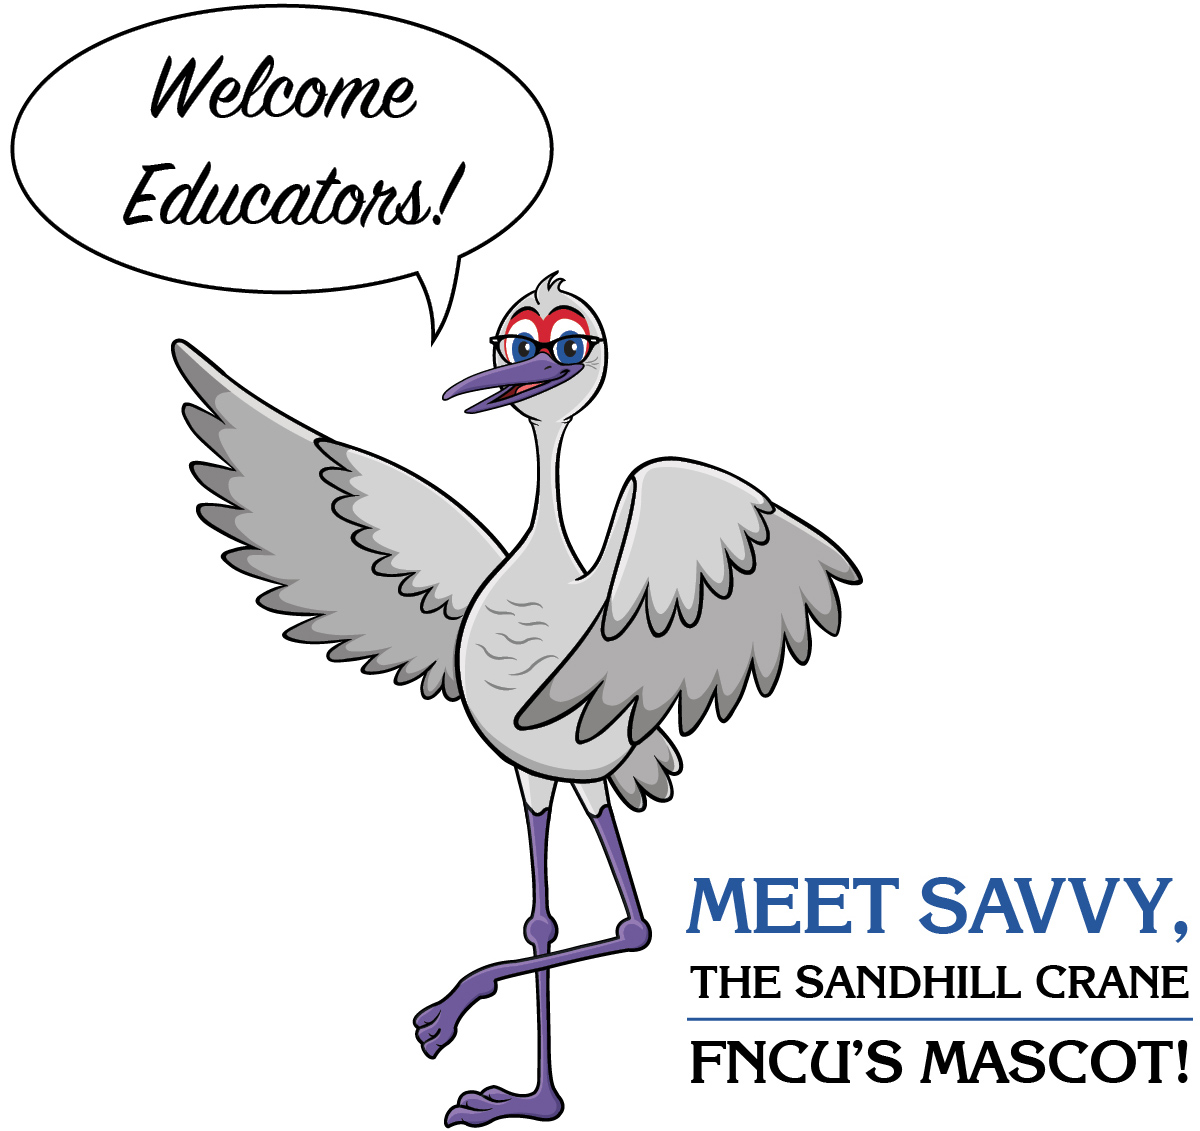 savvy welcomes educators